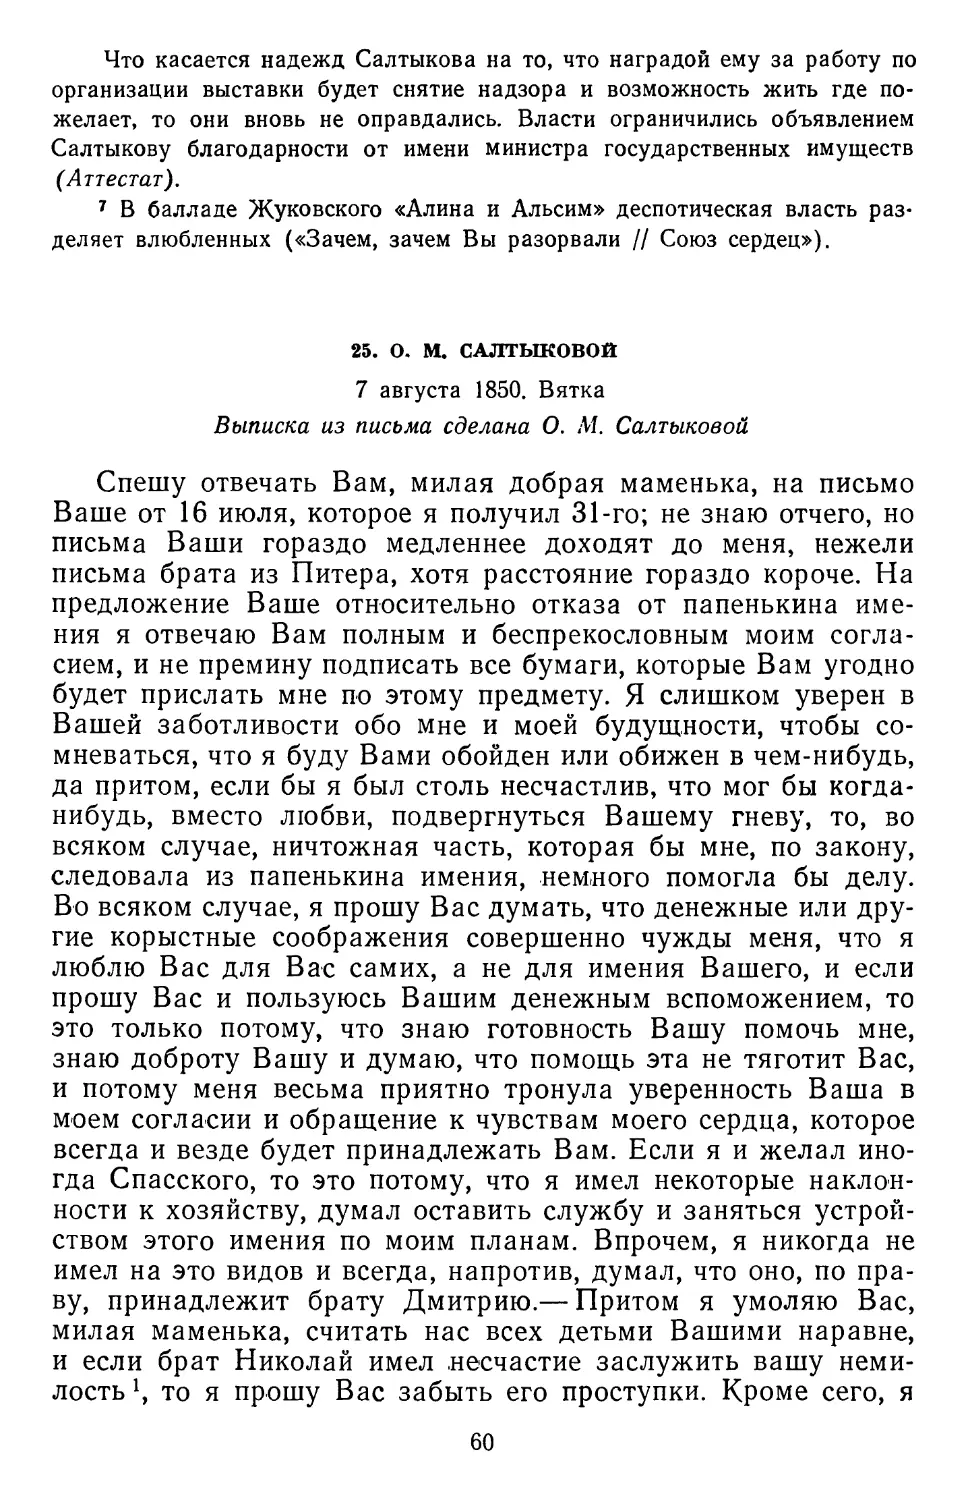 25.О. М. Салтыковой. 7августа 1850. Вятка